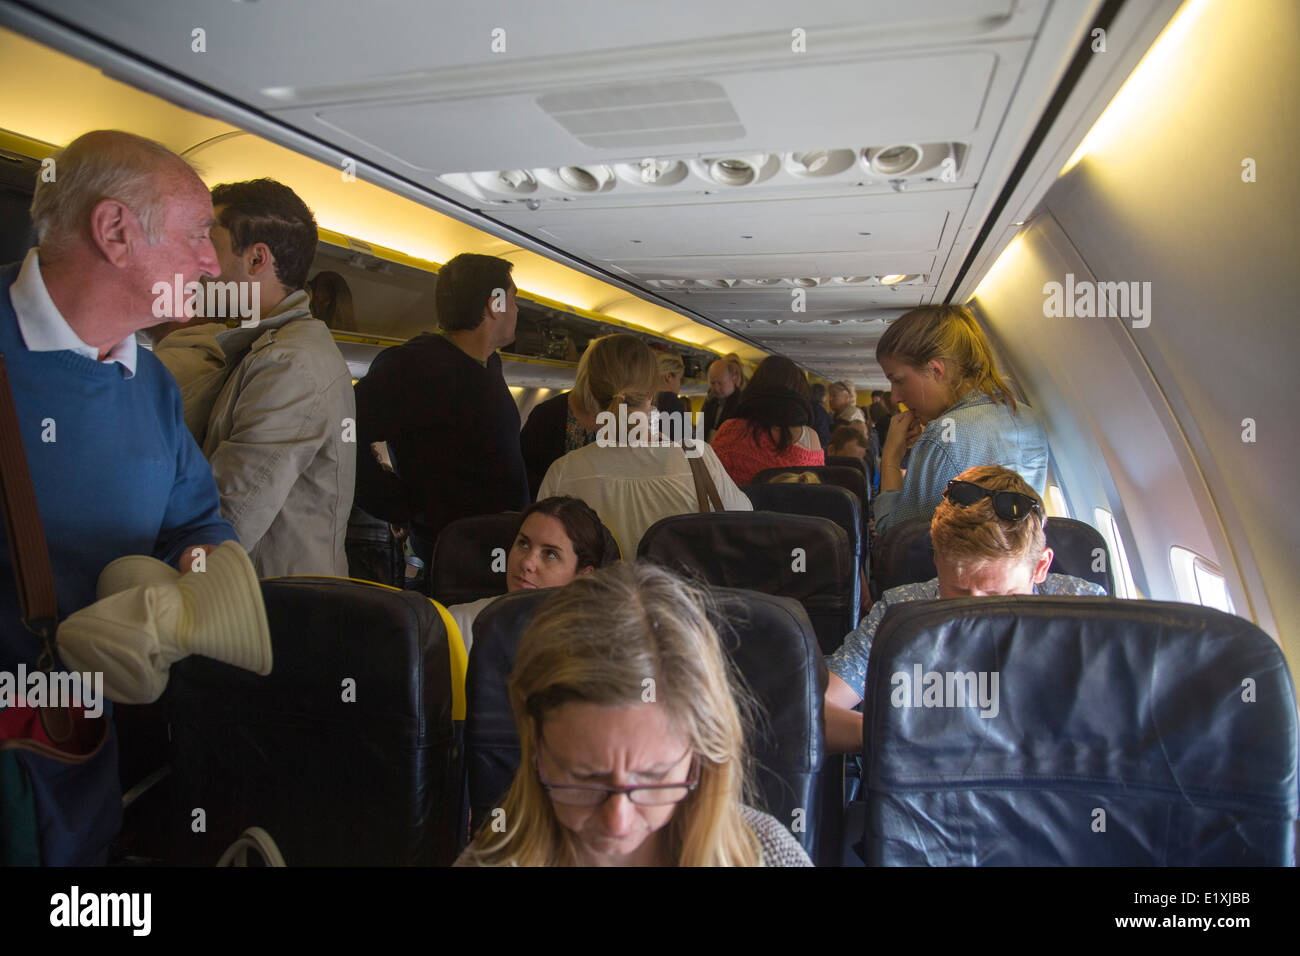 Billigfluglinie Ryanair Stockfoto